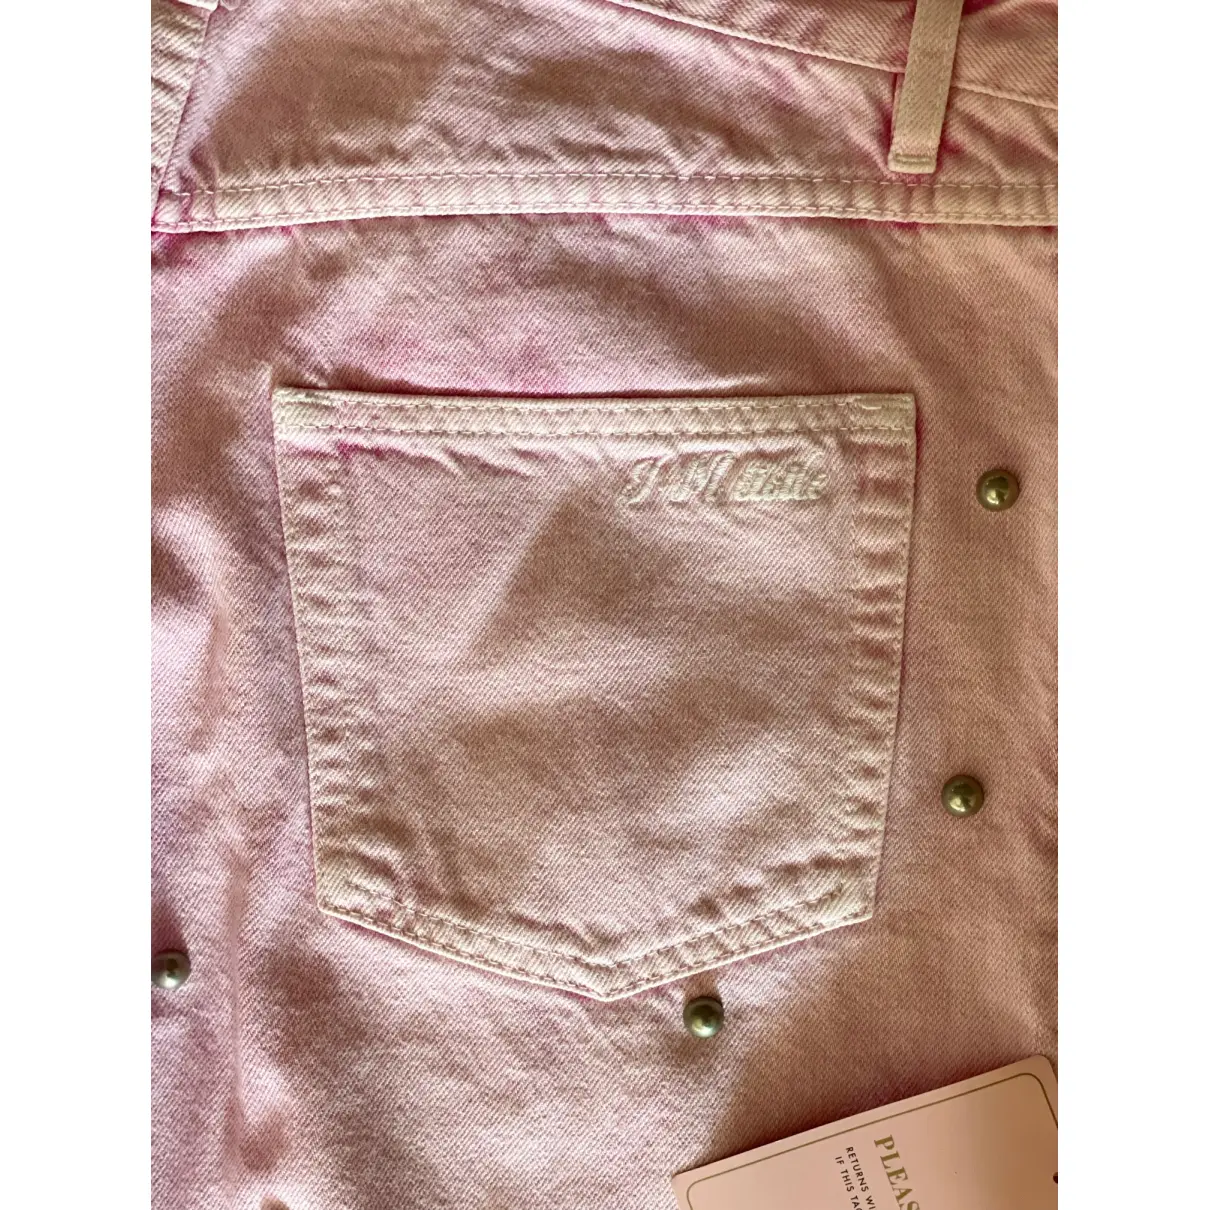 Straight jeans Isabel Marant Etoile